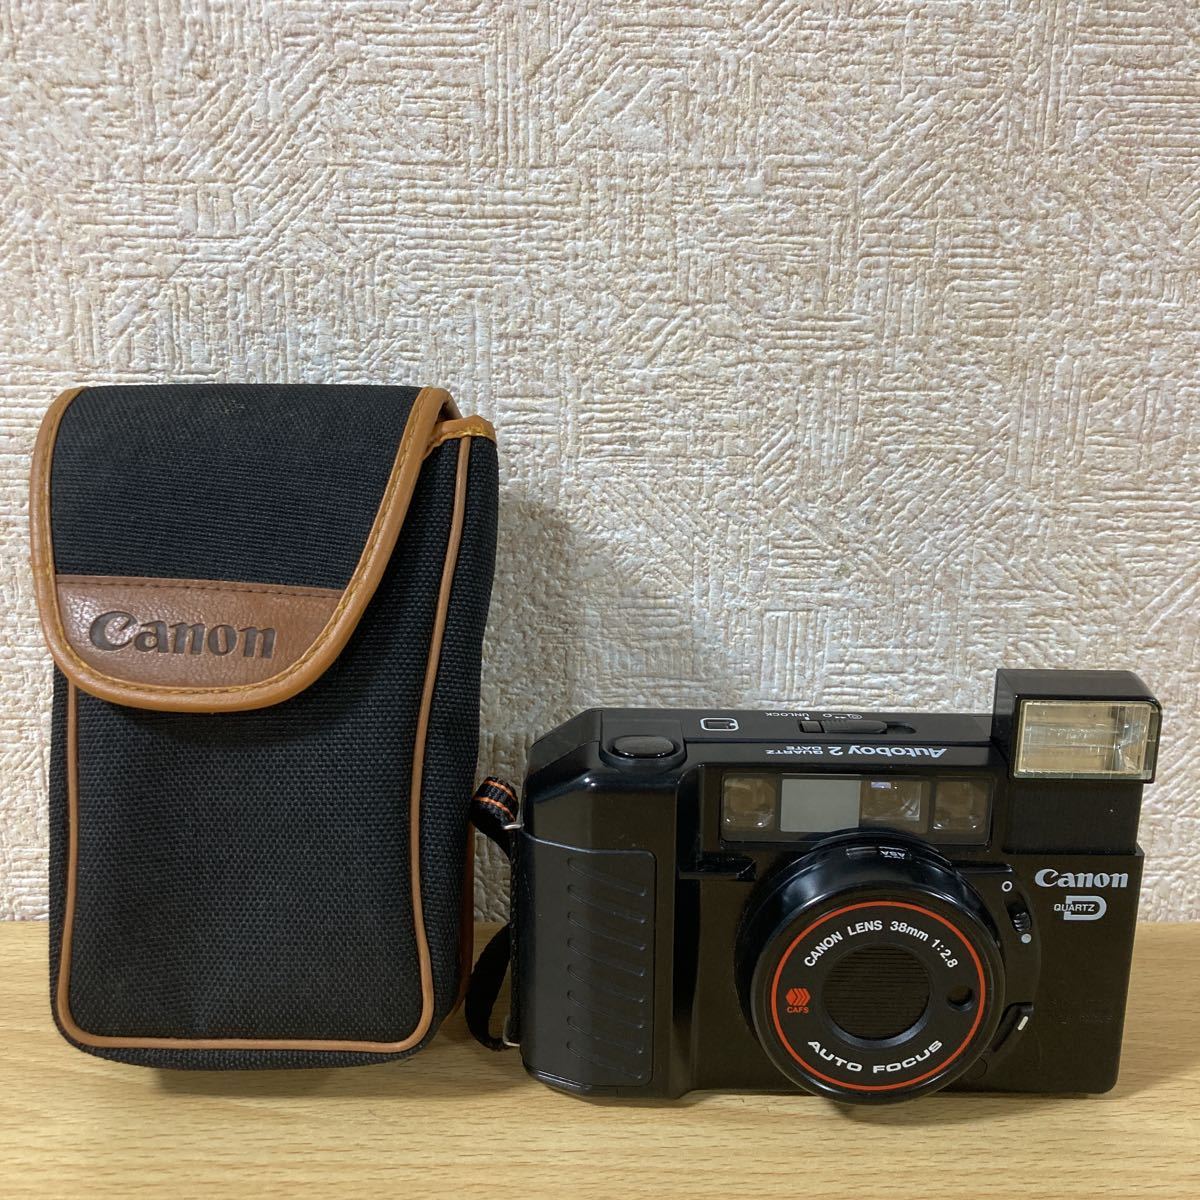 Canon キャノン Autoboy 2 QUARTZ DATE レンズ CANON LENS 38mm 1:2.8 